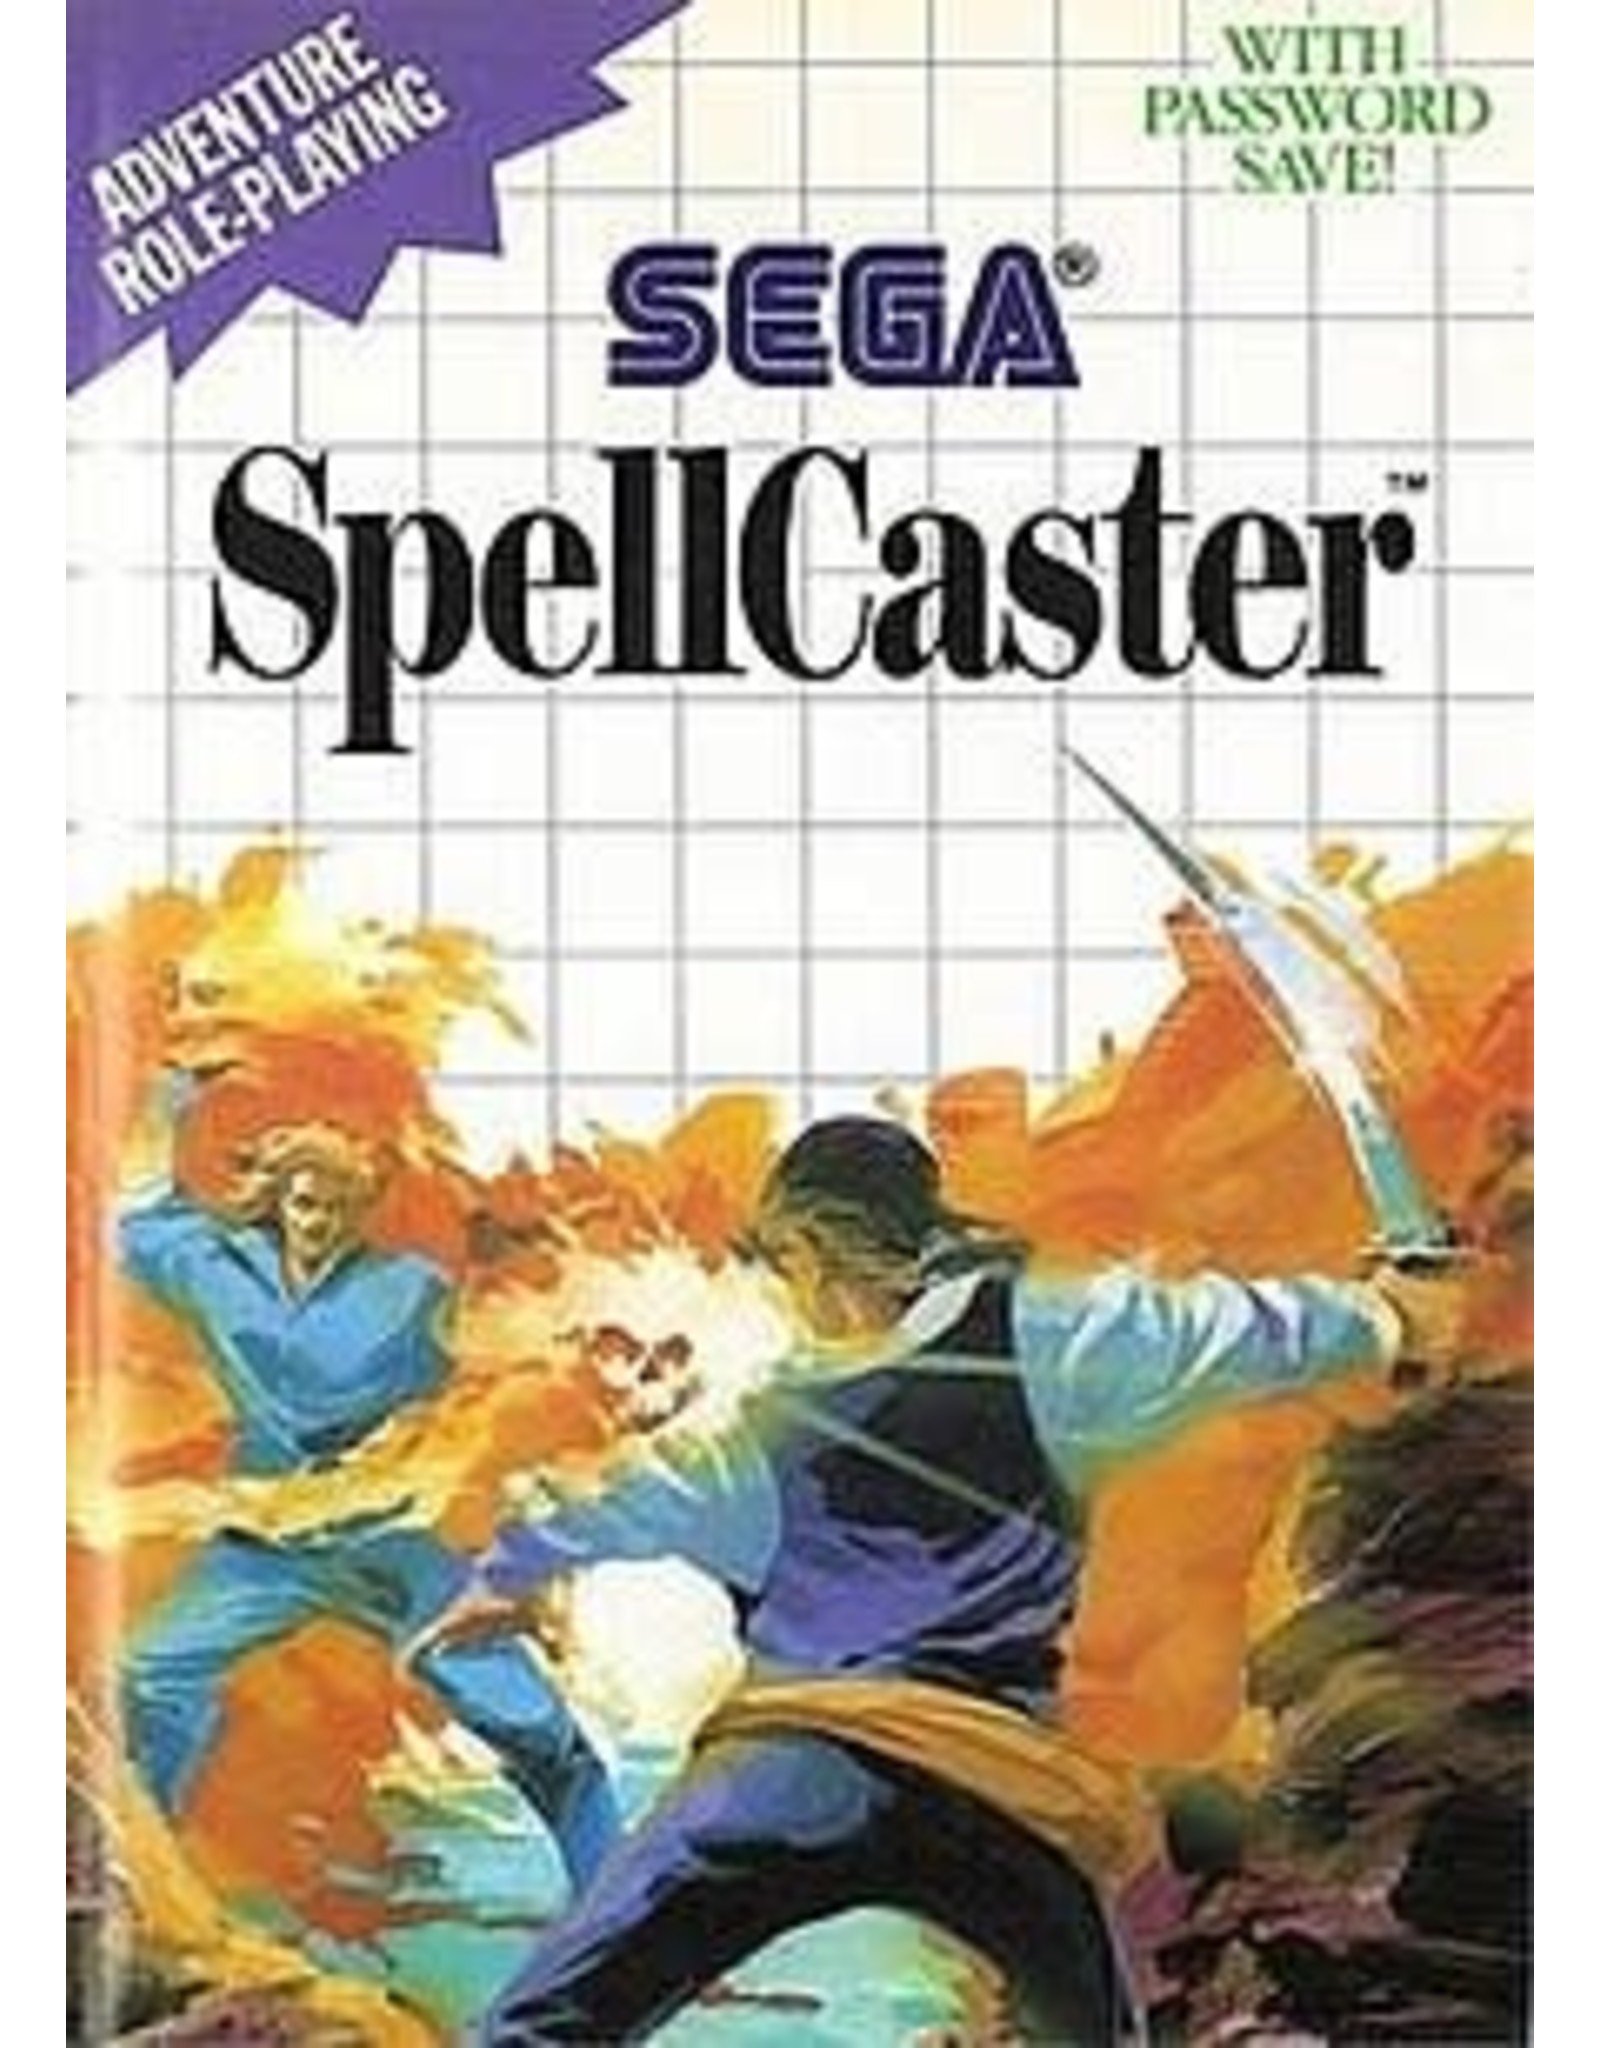 Sega Master System Spellcaster (Cart Only)